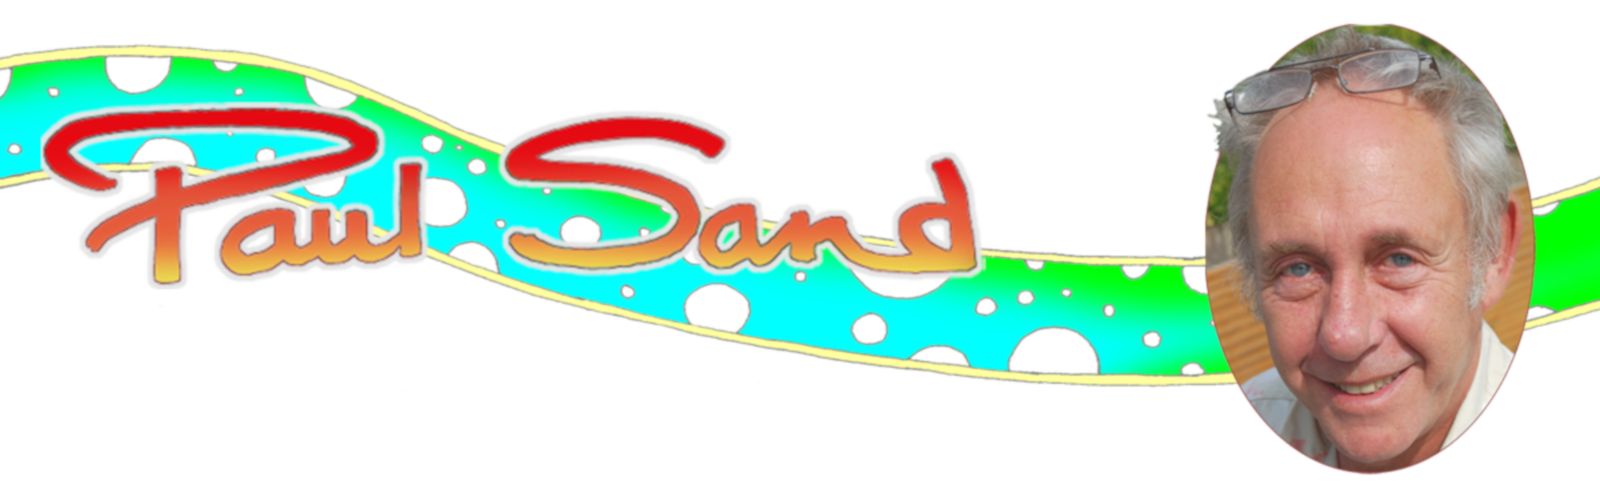 Paul Sand - All Summer's Long